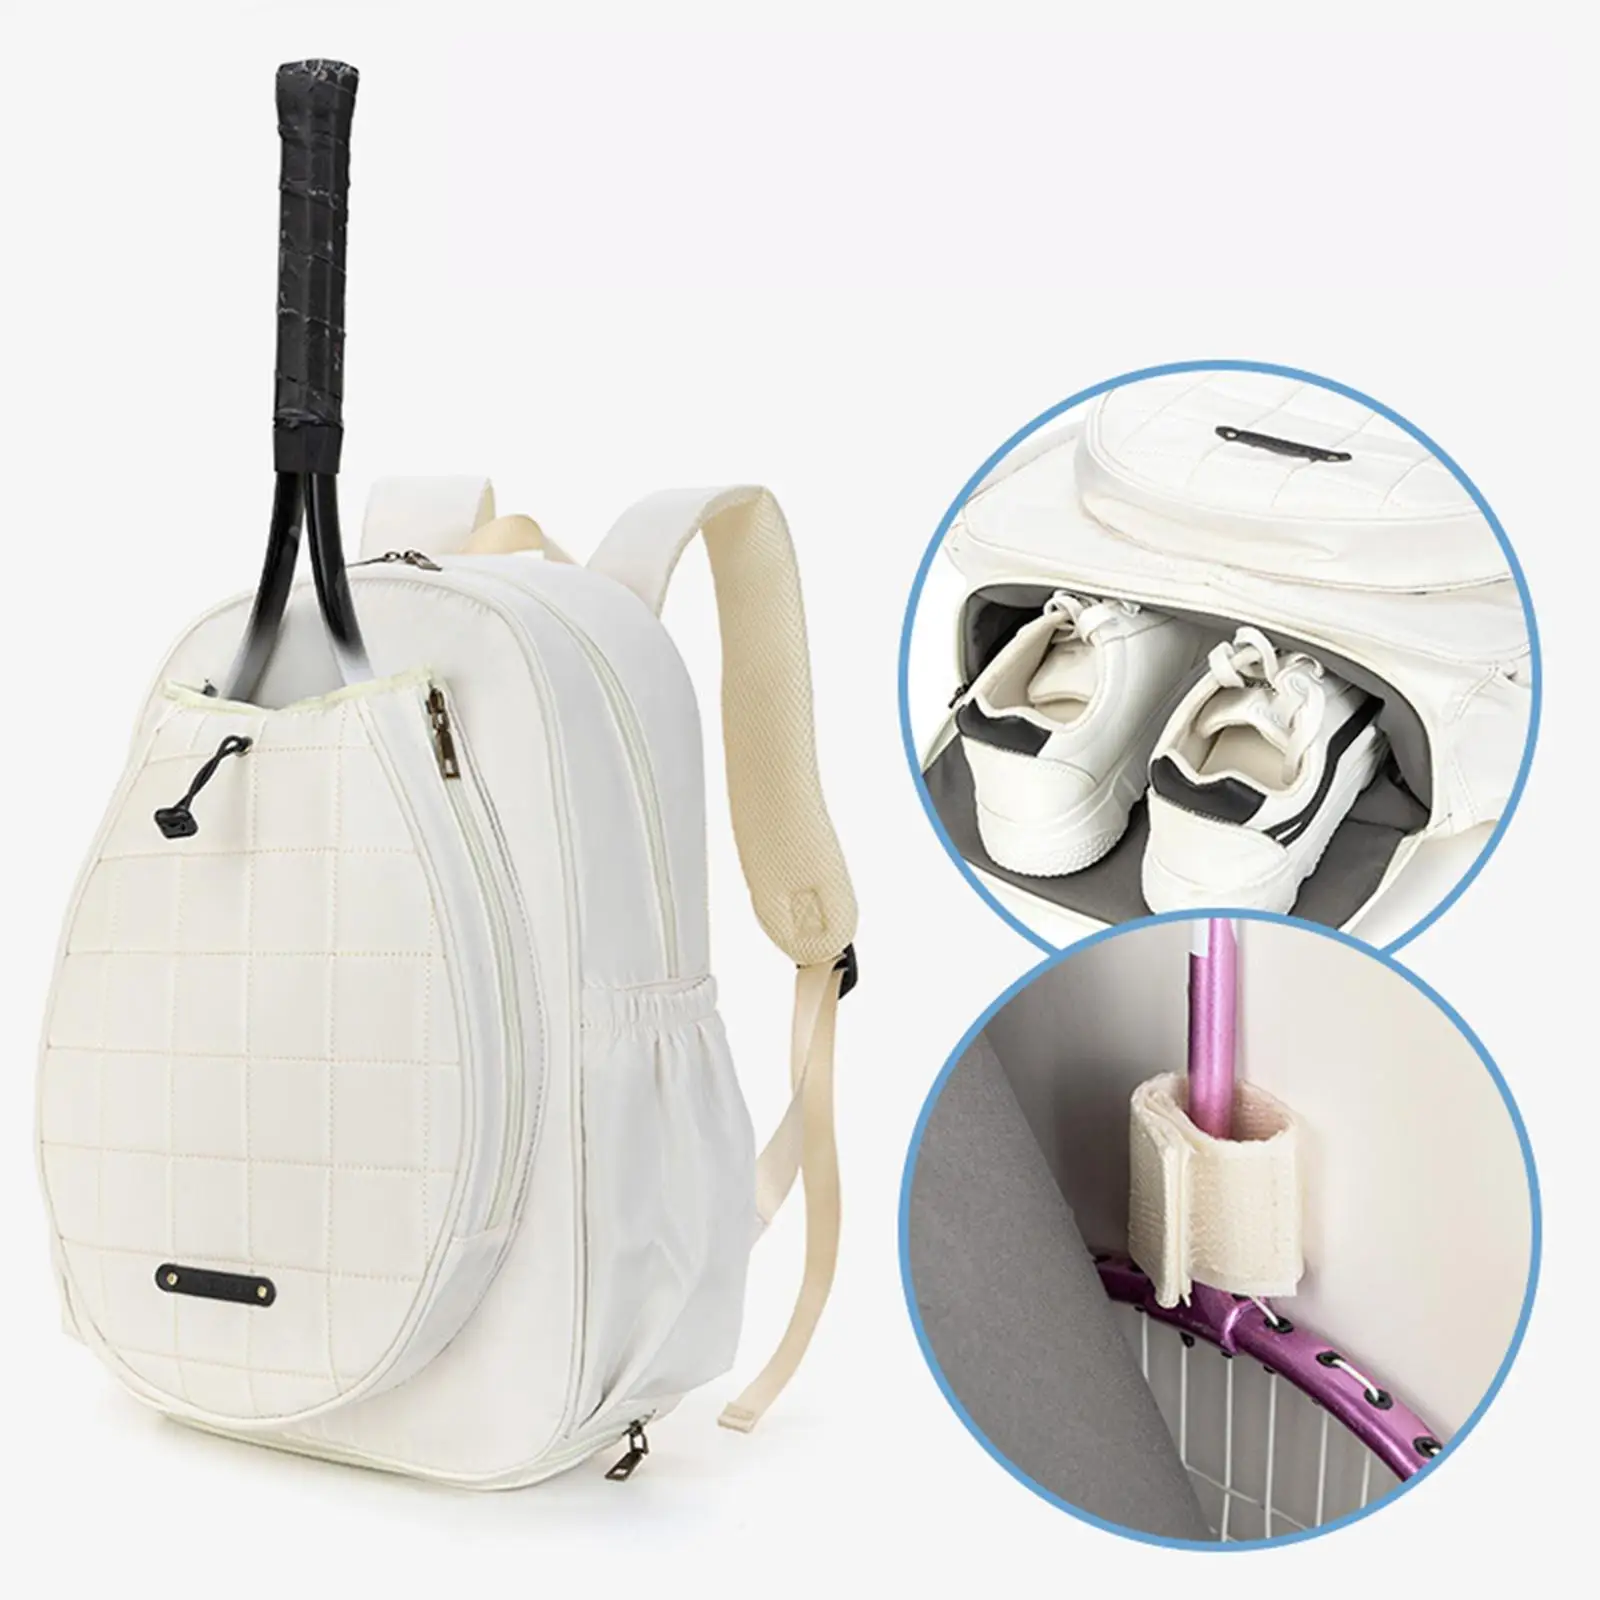 Tennis Backpack Tennis Bag Portable Outdoor Sport Bag Tennis Racket Bag Racket Holder for Badminton Racquet Pickleball Paddles